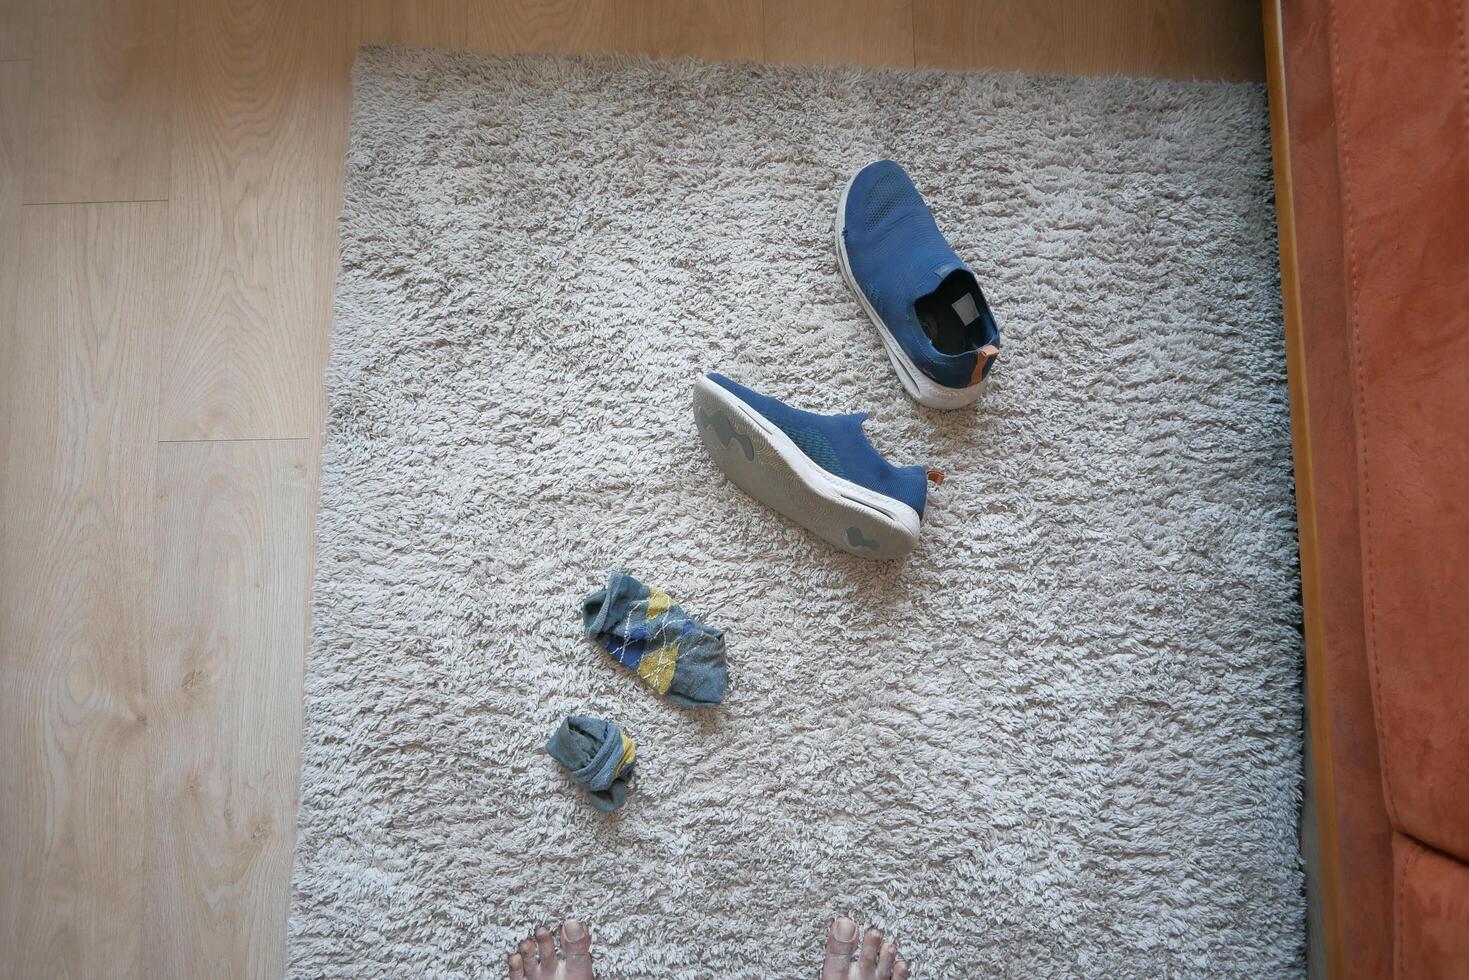 sporco calzino e scarpa su pavimento foto